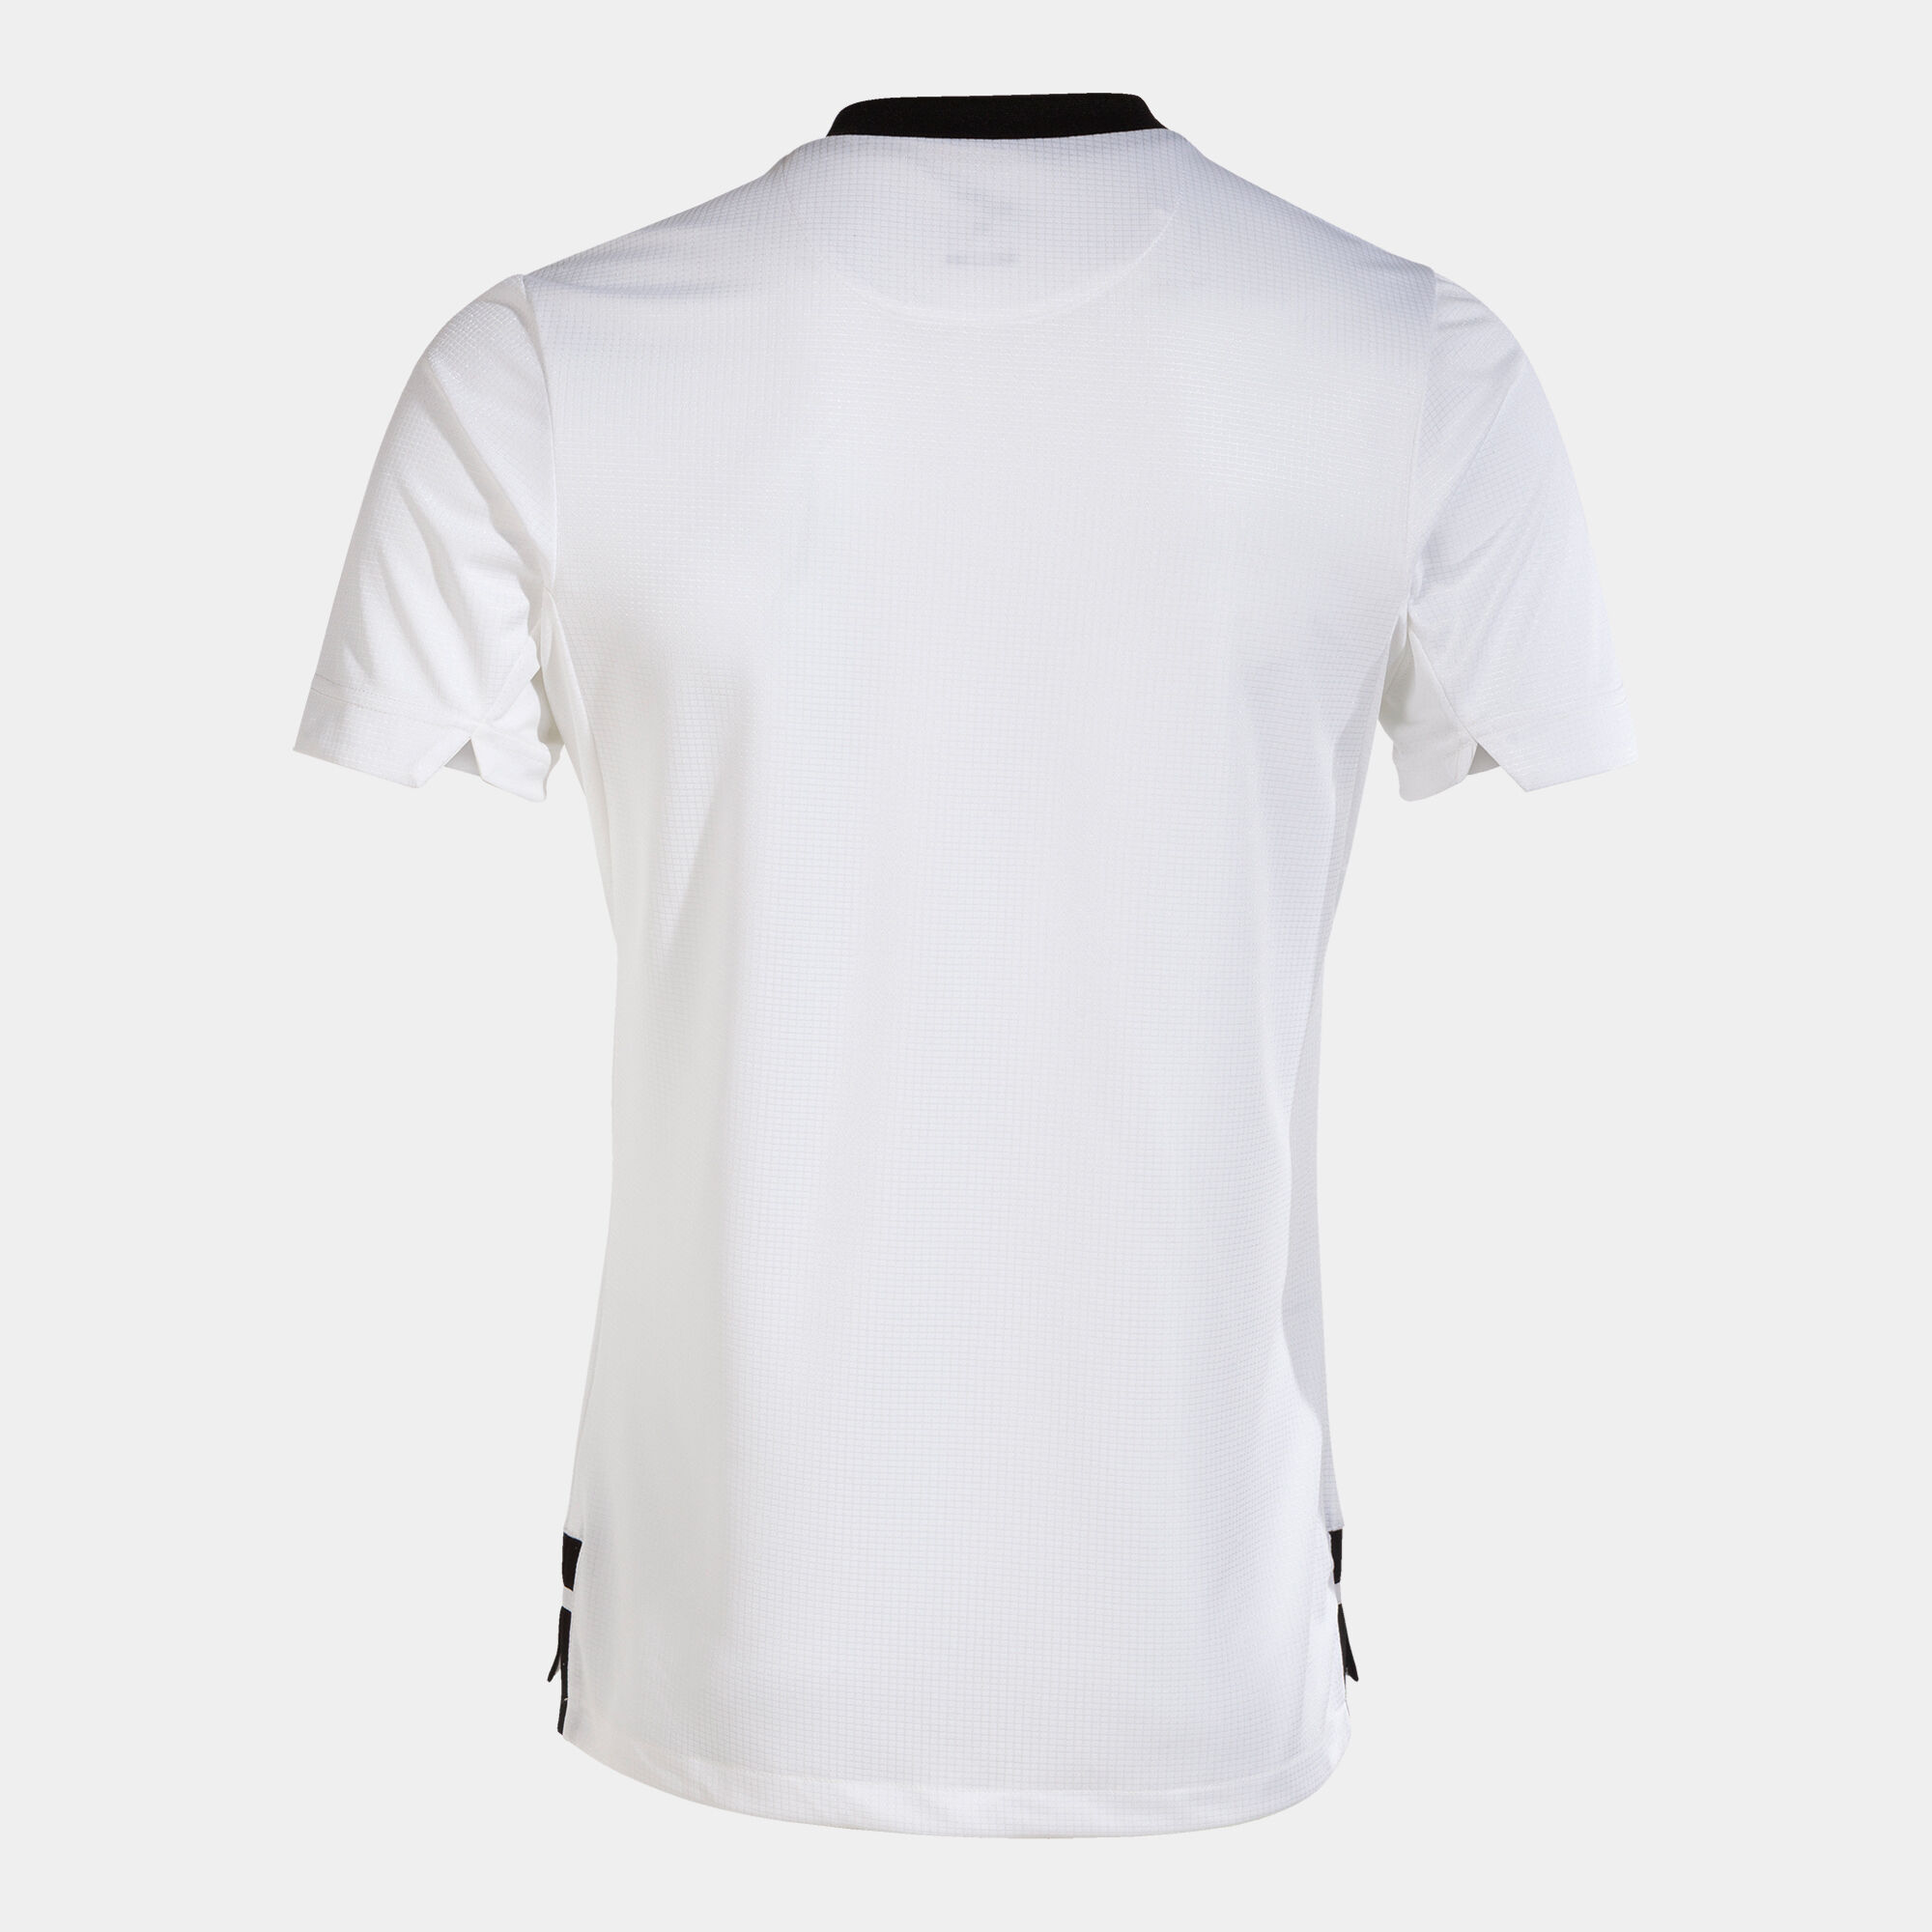 T-shirt manga curta homem Ranking branco preto